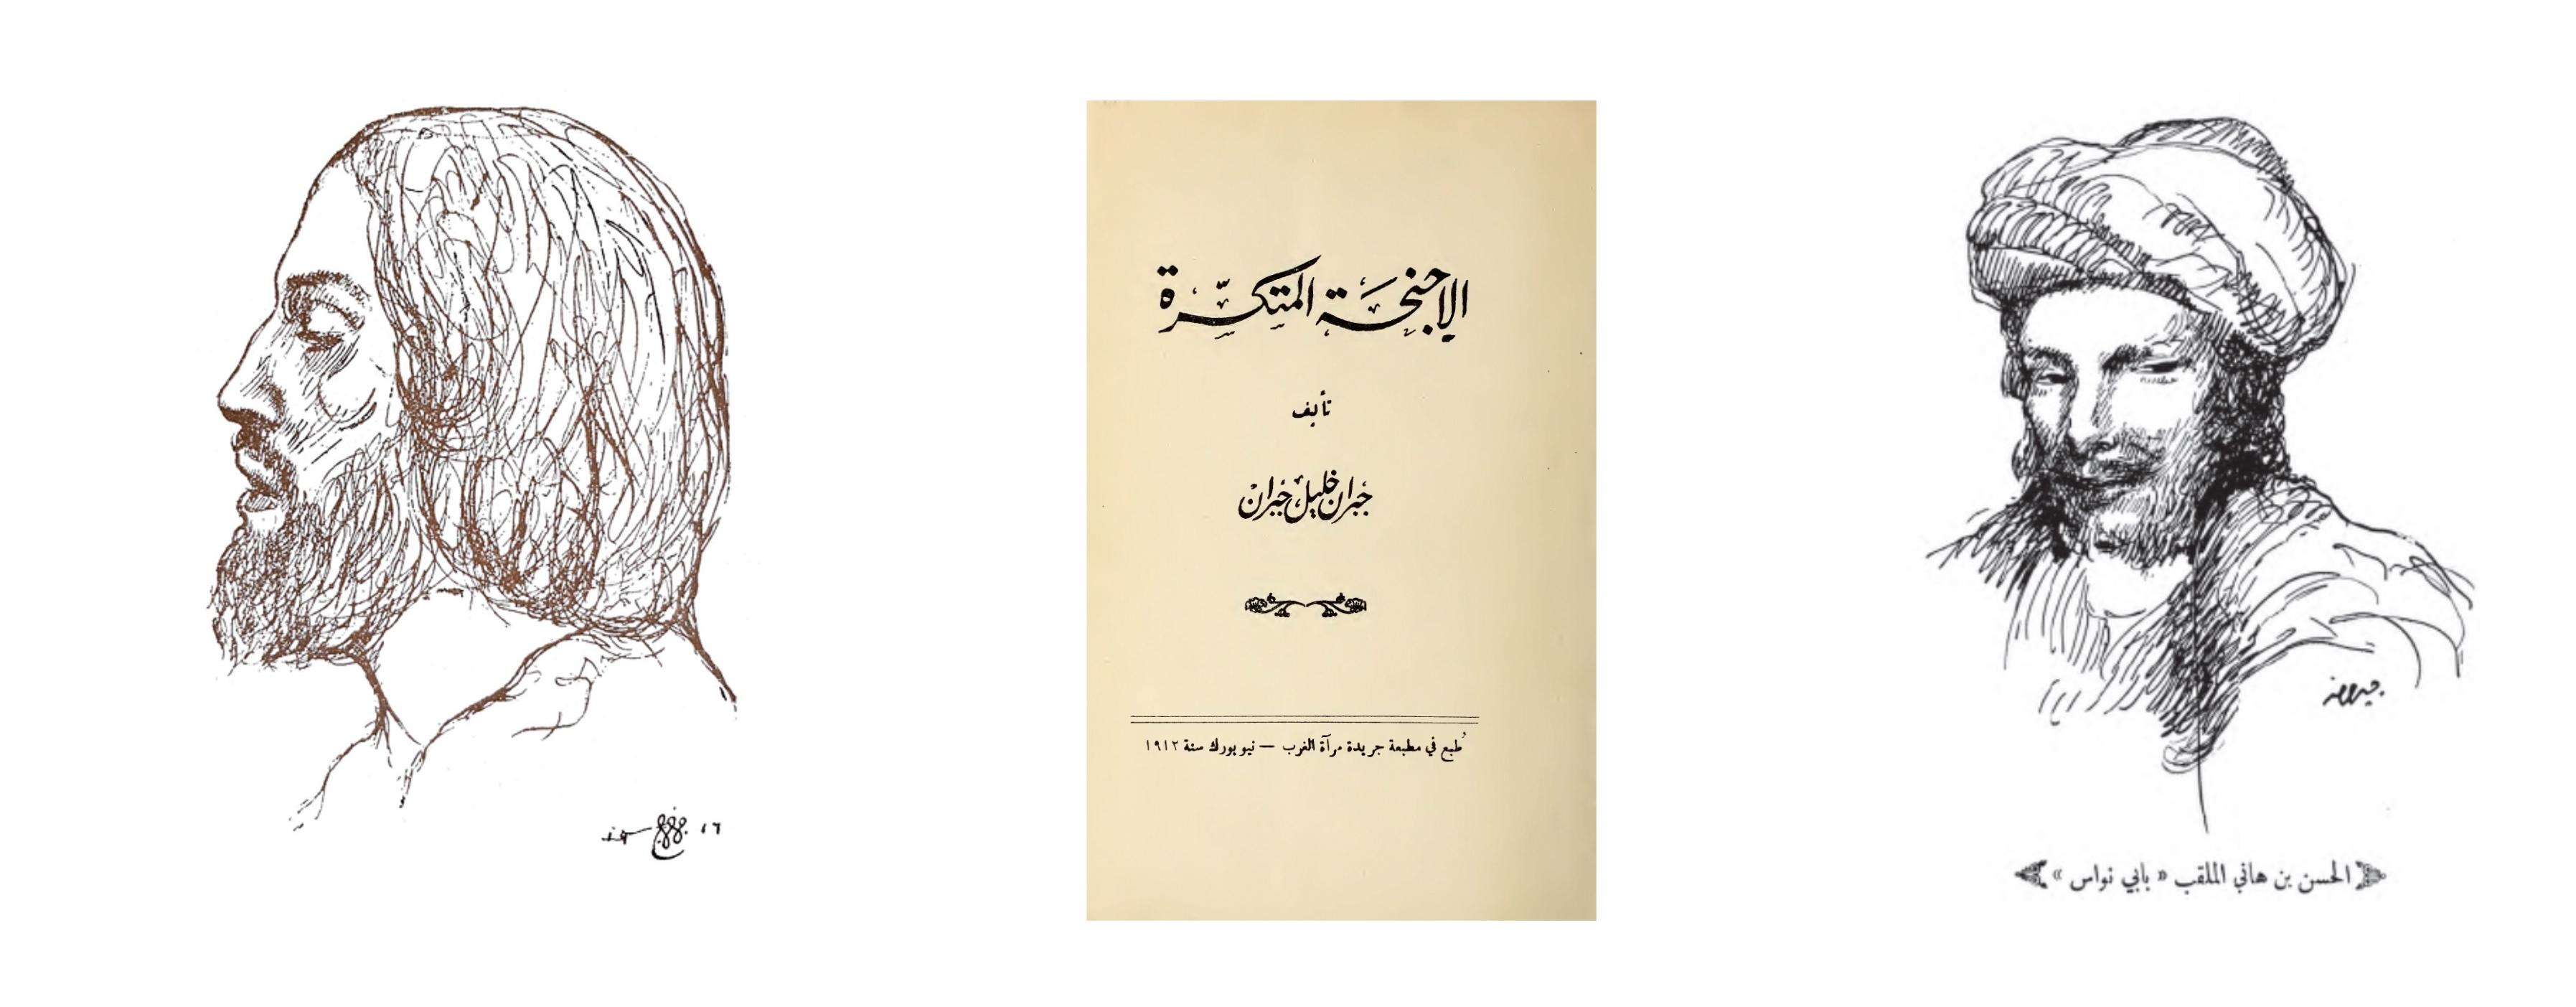 1. Majnun Layla by Gibran 2. The Broken Wings, 1912 original Arabic 3. Abu Nuwas by Gibran